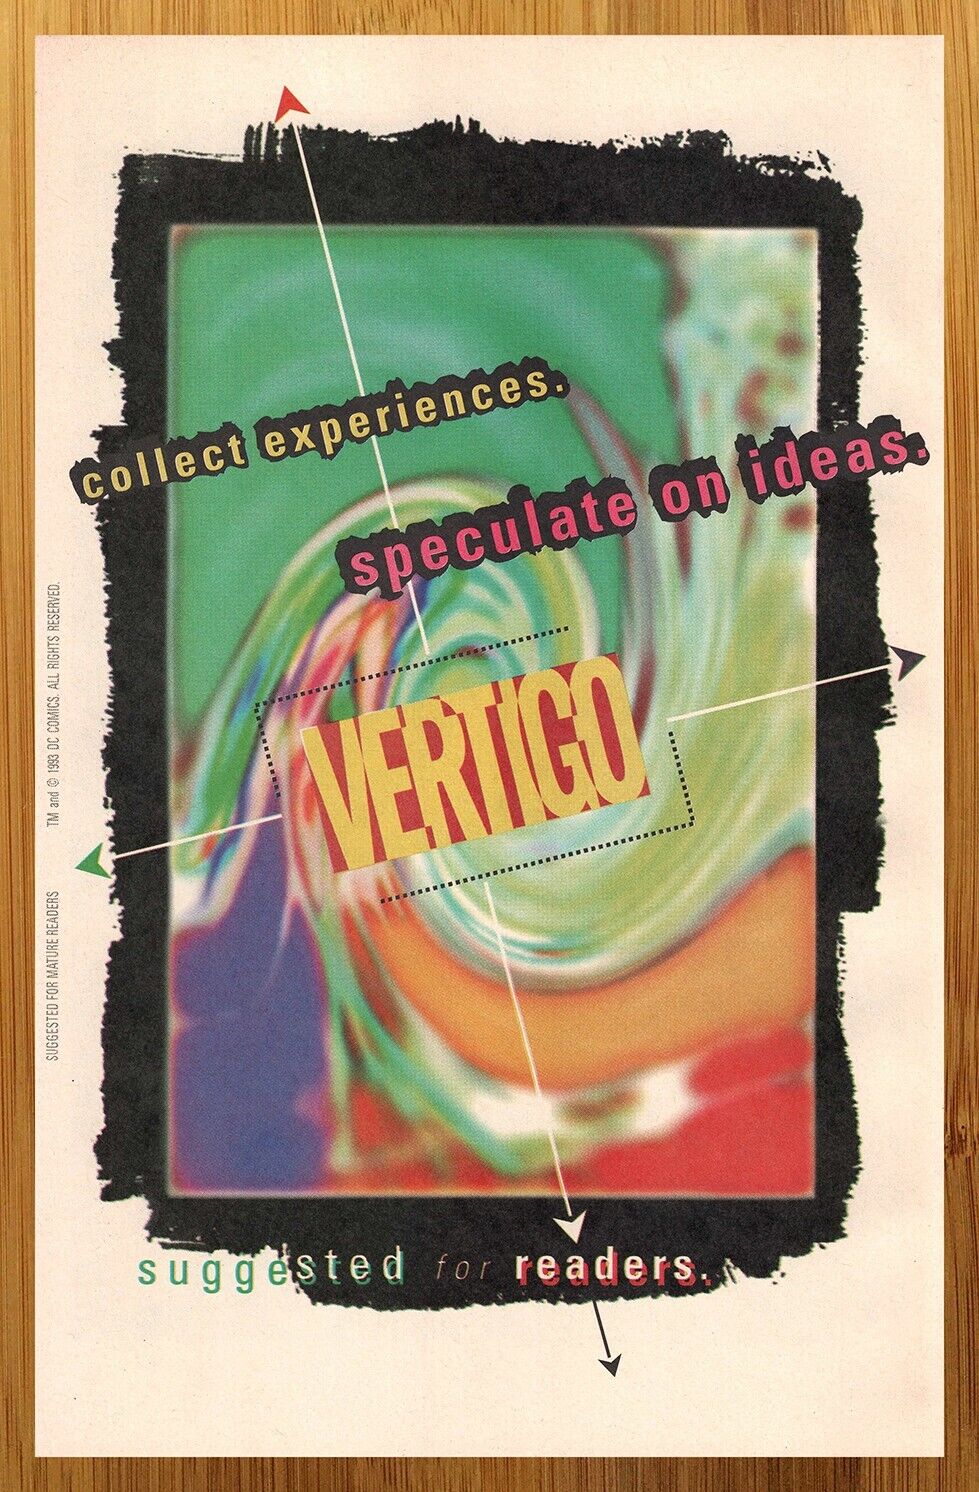 1993 DC/Vertigo Comics Vintage Print Ad/Poster Authentic Retro Promo Pop Art 90s